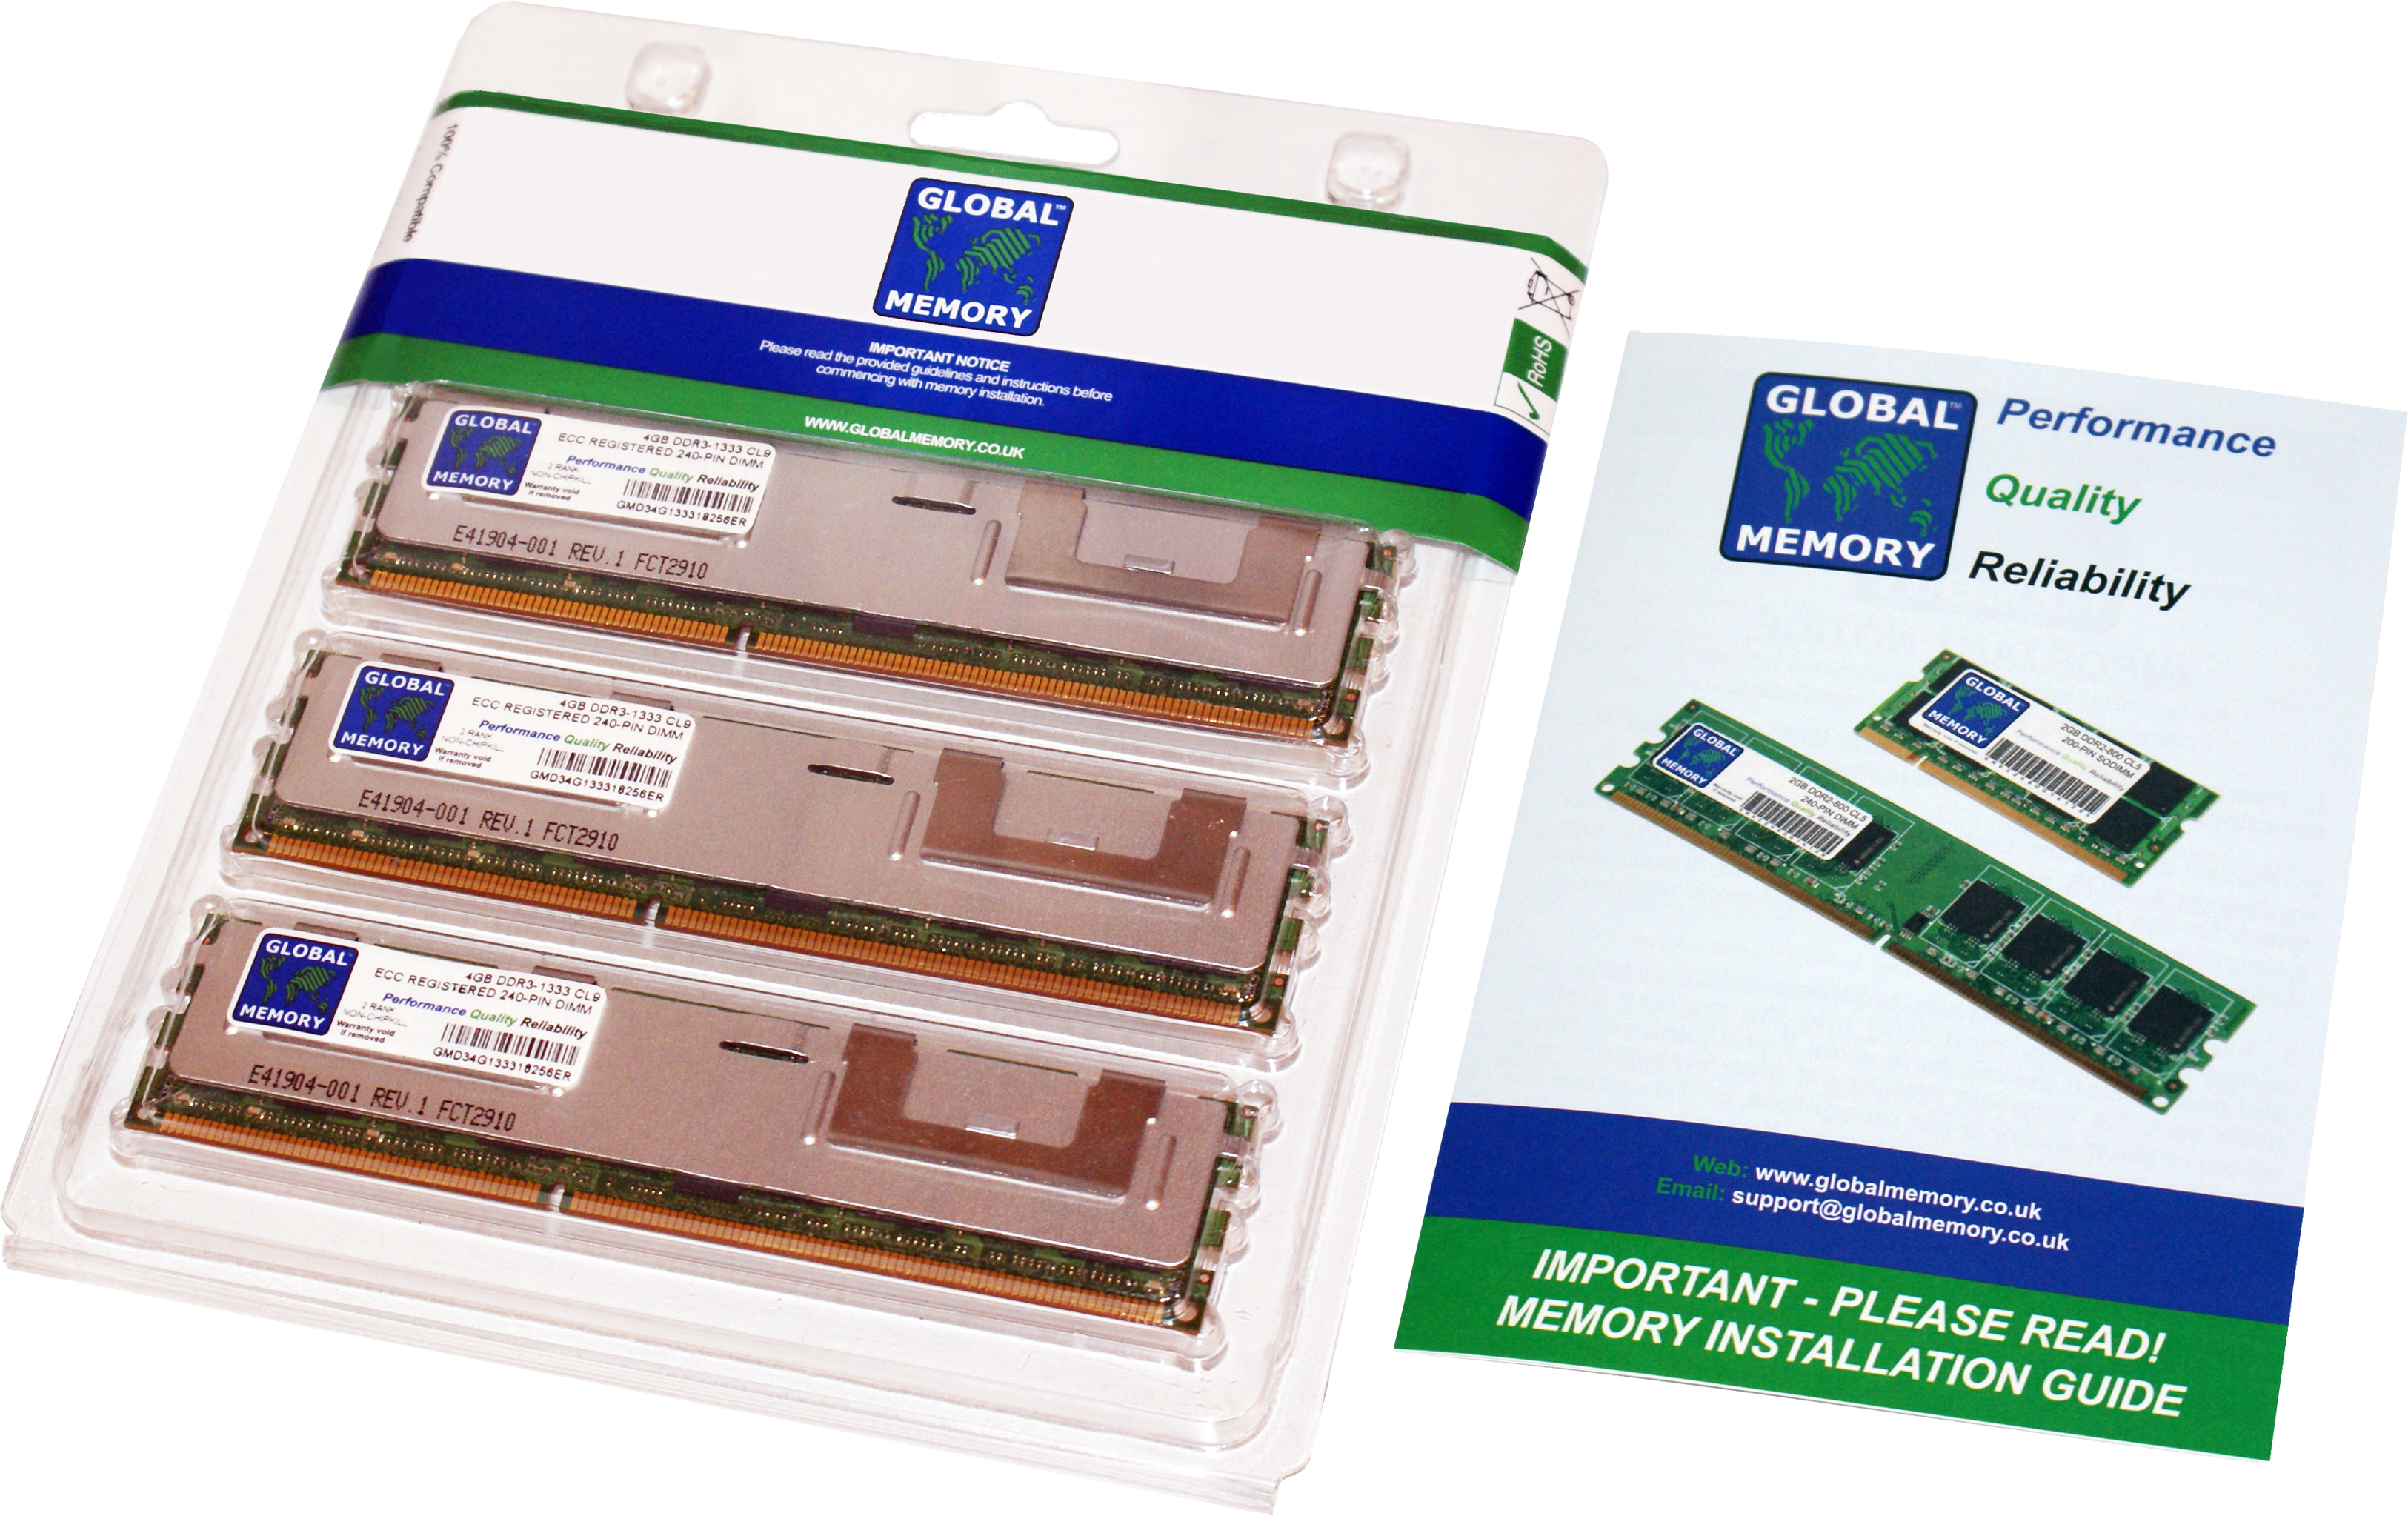 48GB (3 x 16GB) DDR3 1066/1333MHz 240-PIN ECC REGISTERED DIMM (RDIMM) MEMORY RAM KIT FOR ACER SERVERS/WORKSTATIONS (12 RANK KIT NON-CHIPKILL)